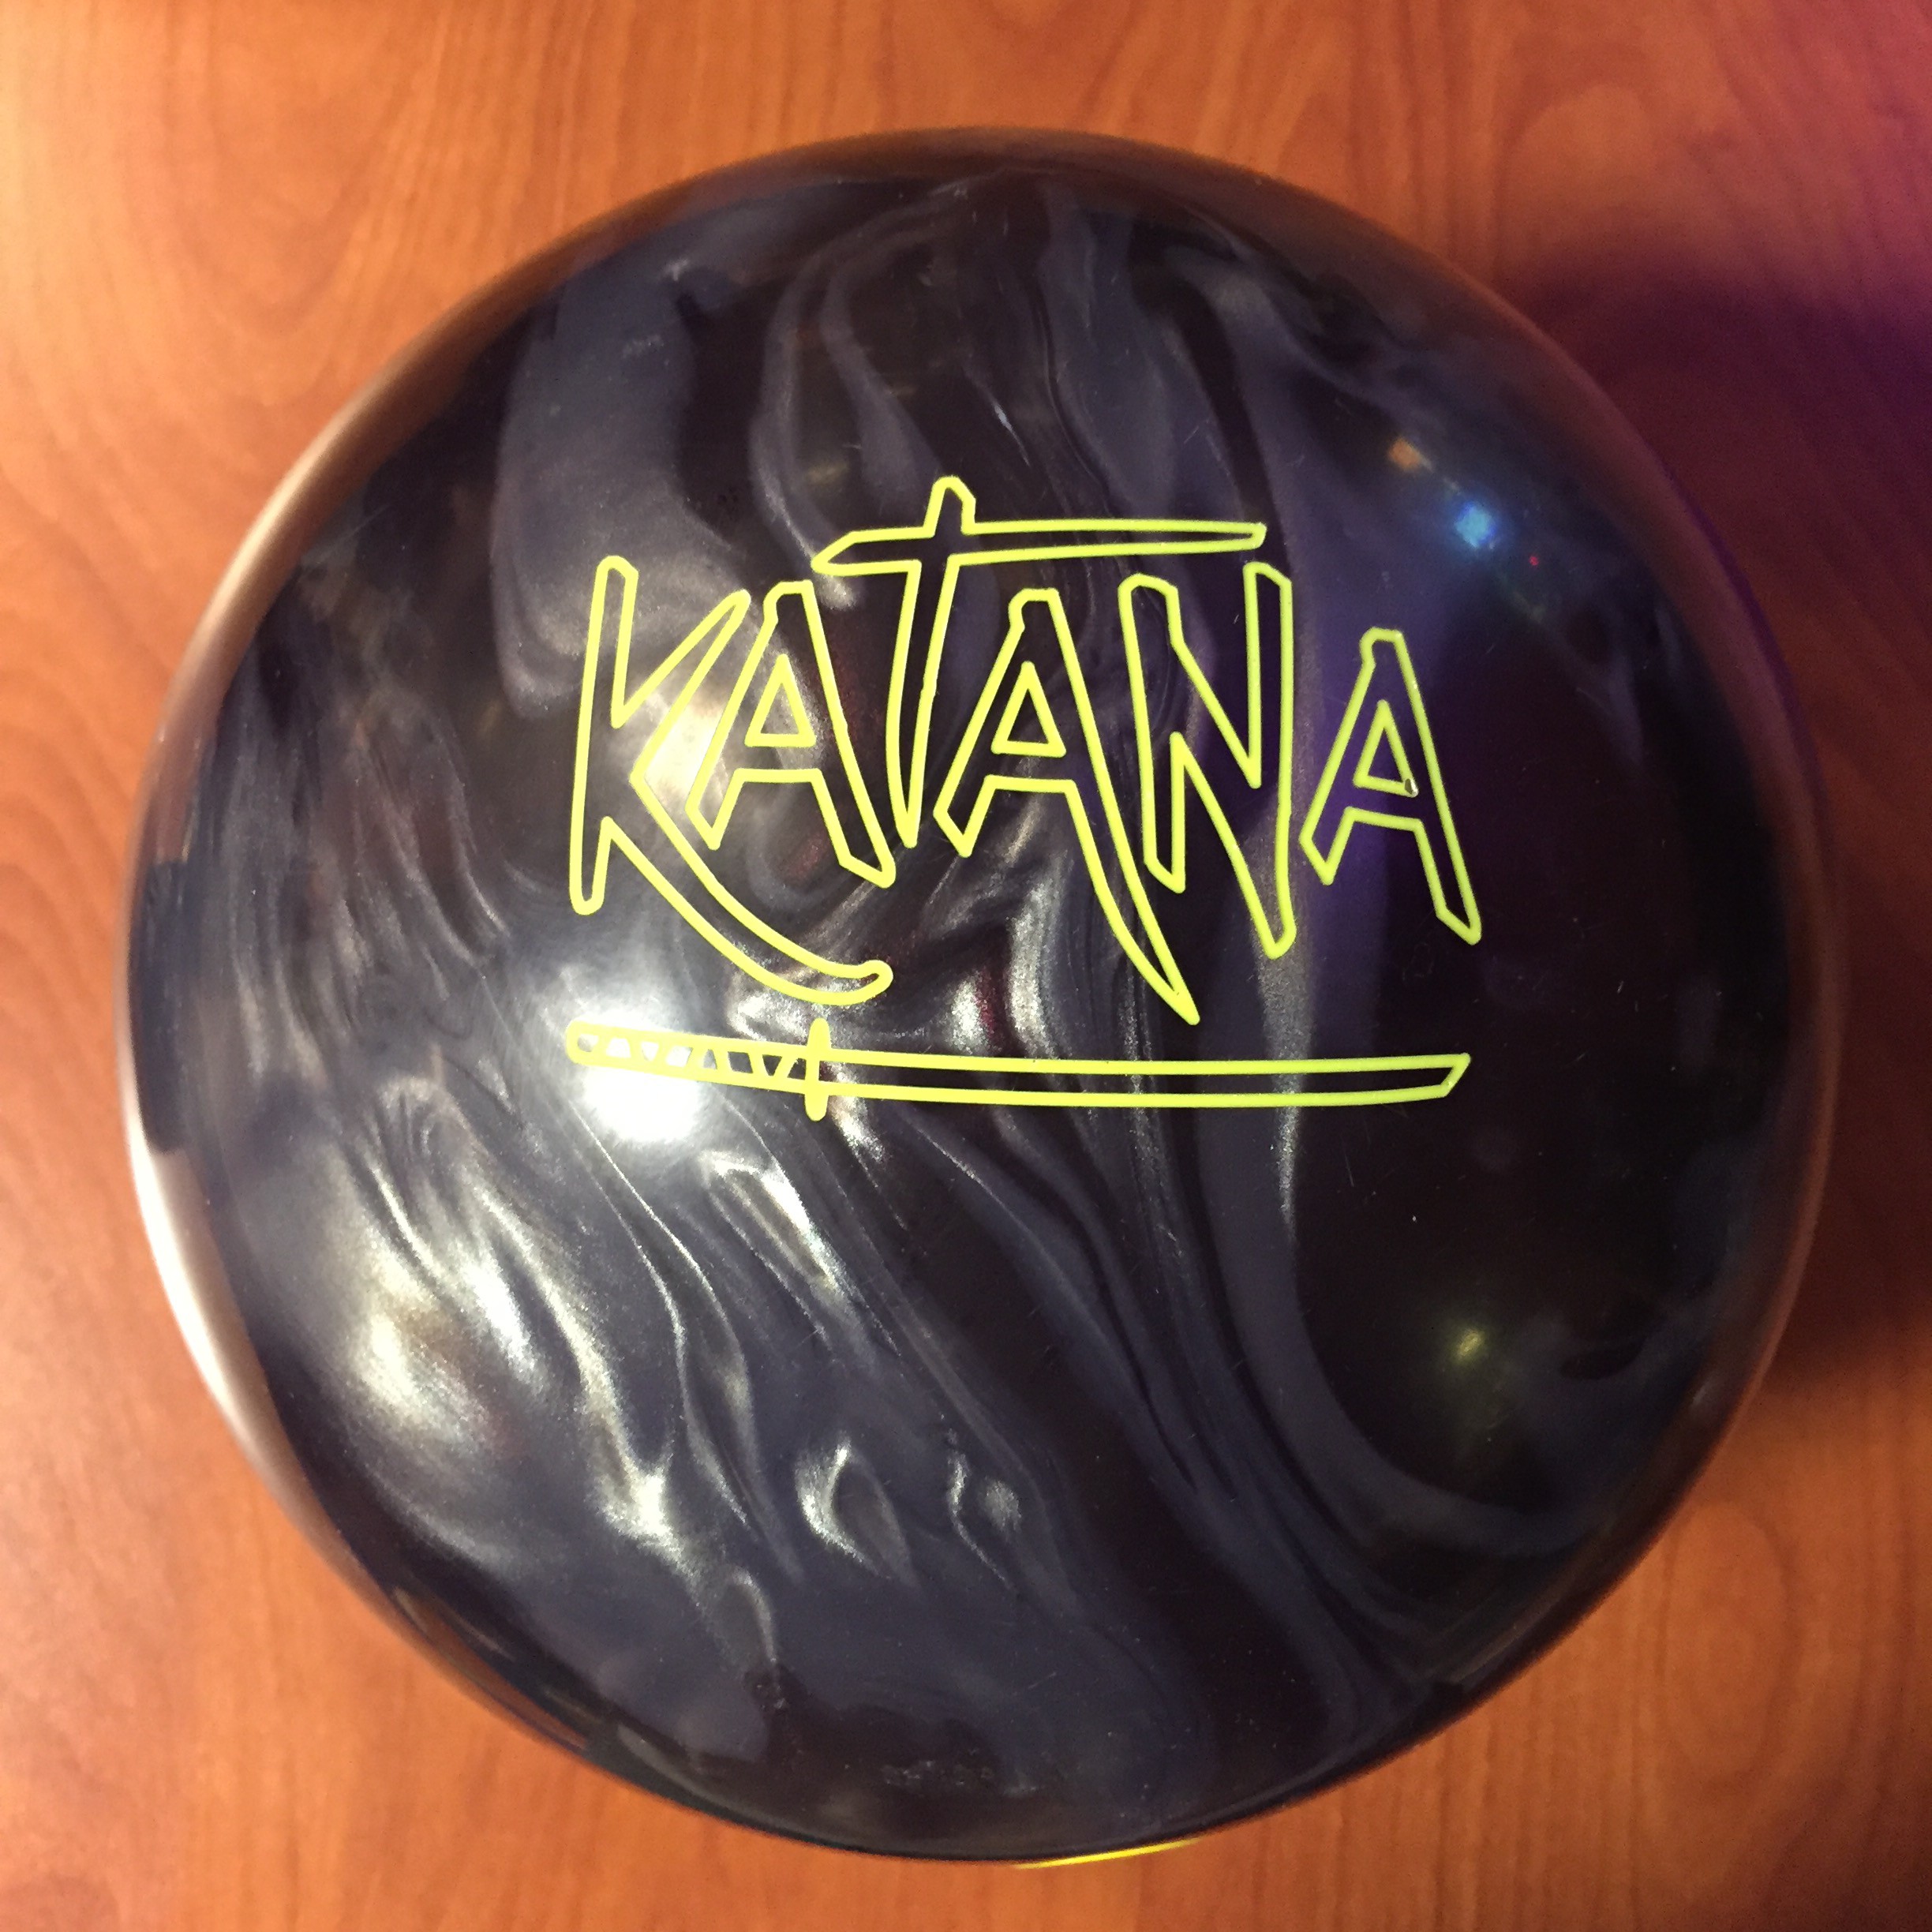 Radical Katana 1st Quality Bowling Ball15 Pounds! 